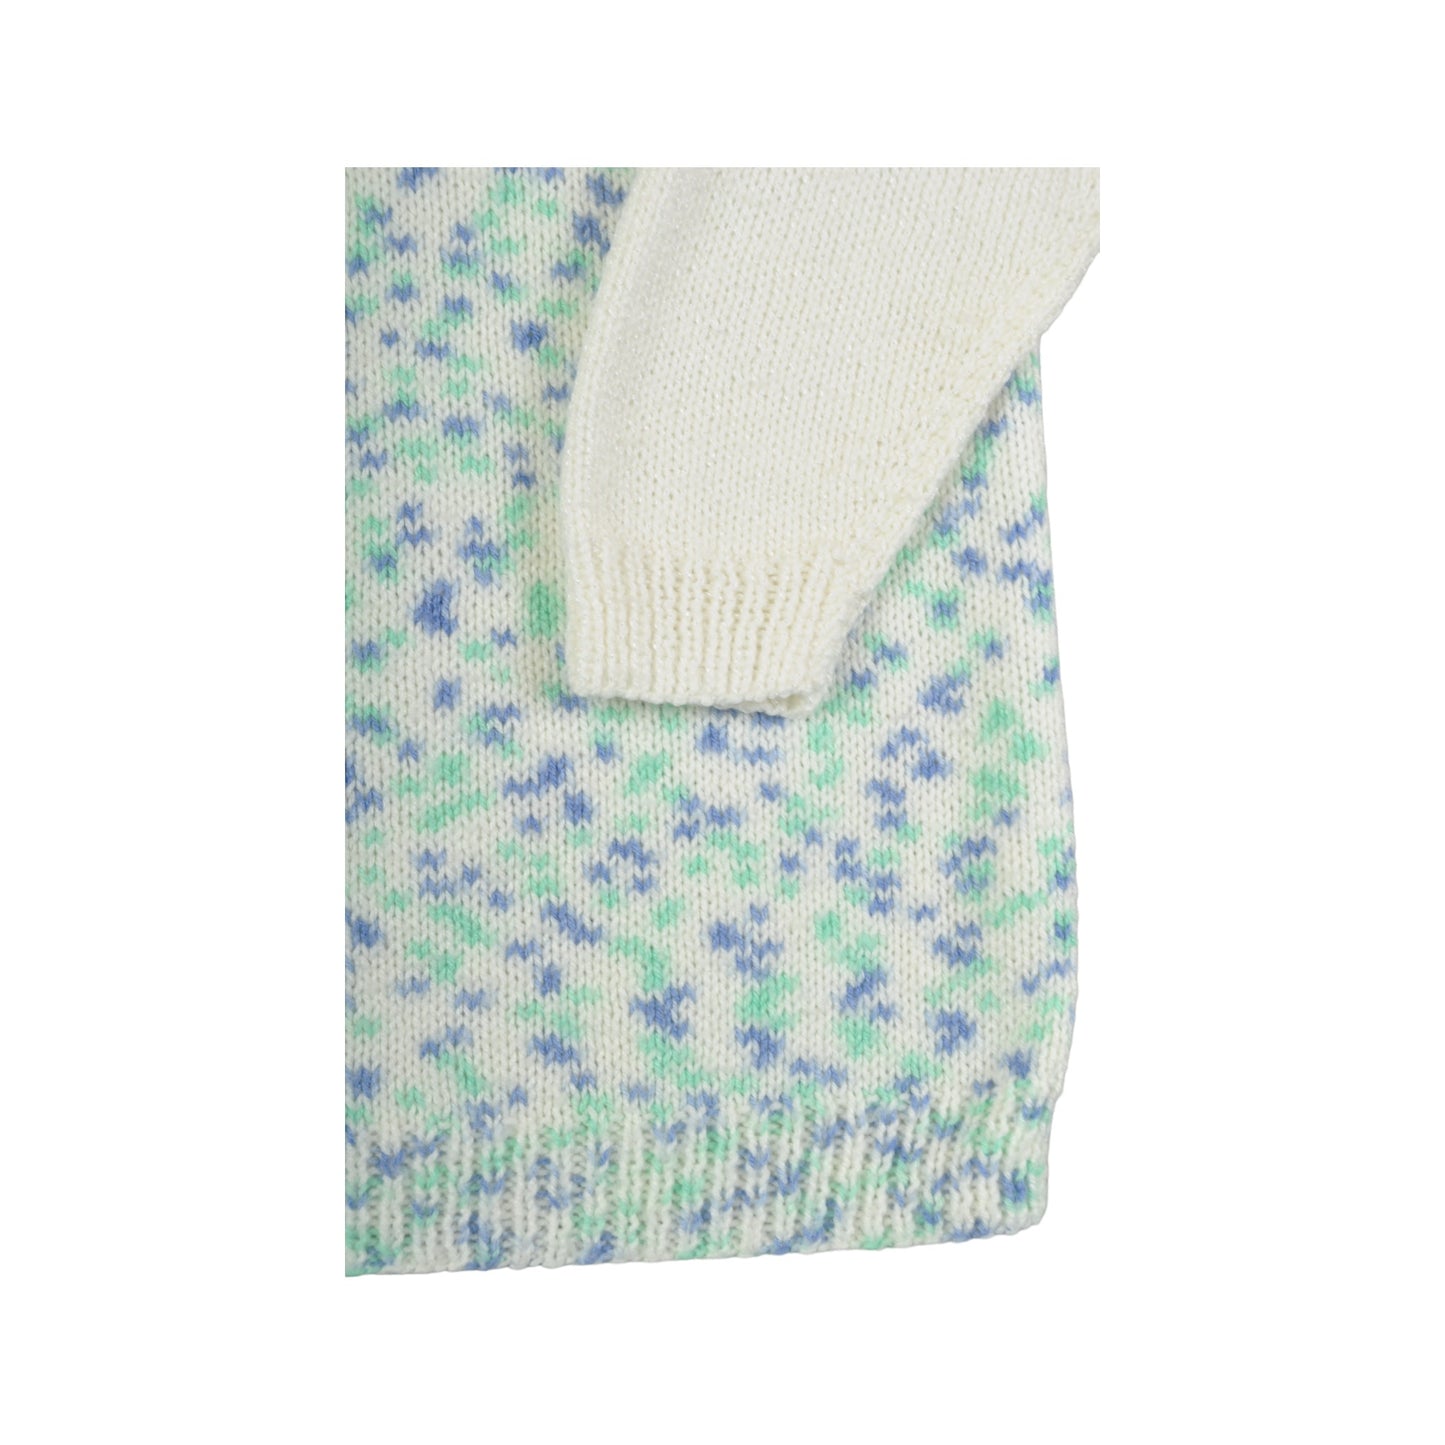 Vintage Knitted Jumper Handmade White/Green Ladies Medium